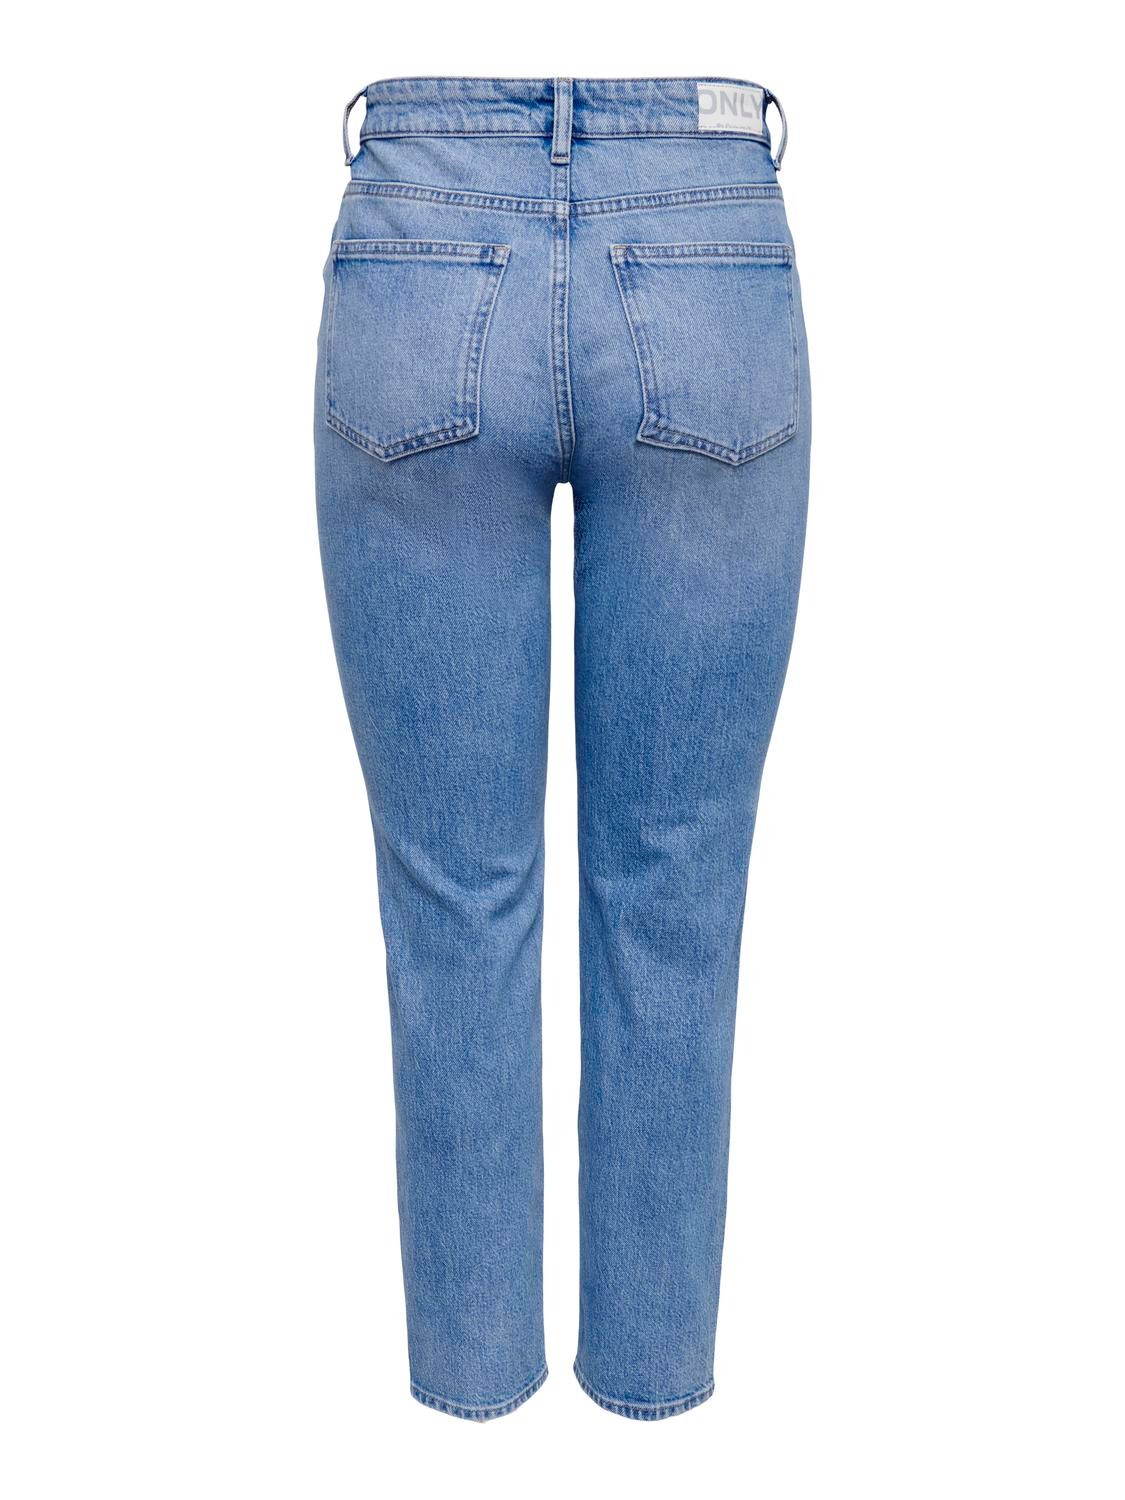 Straight High Jeans - Light denim blue - Ladies